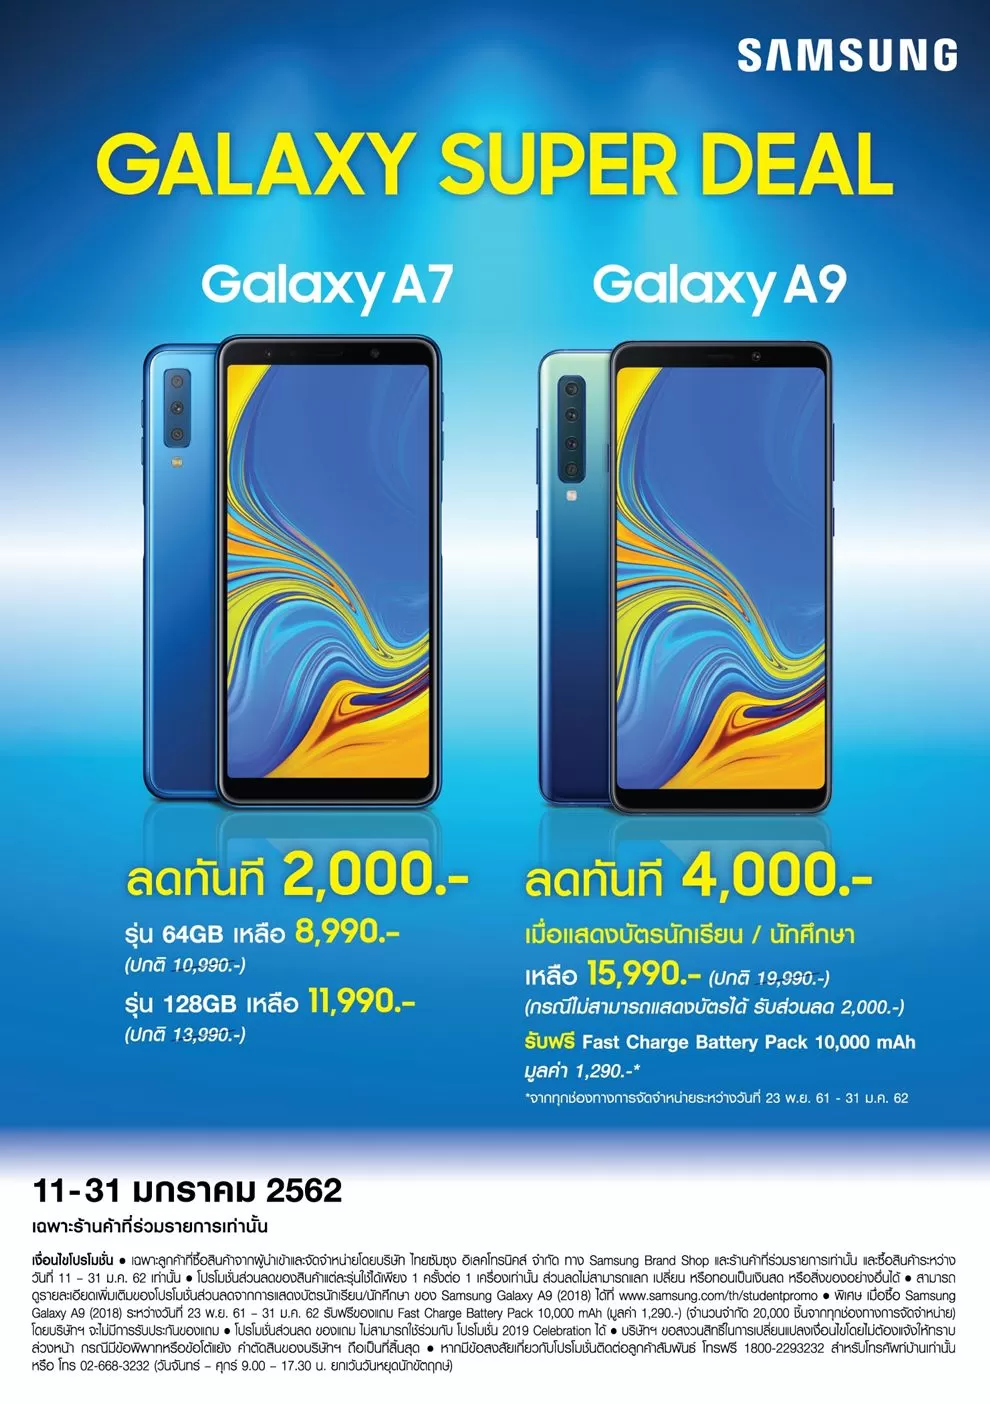 Galaxy A7IA9 SIS A4 | Samsung Galaxy A7 | Samsung จัดเต็ม ส่งโปรแรง “Galaxy ซูเปอร์ ดีล” มอบส่วนลดสำหรับ Galaxy A7 และ A9